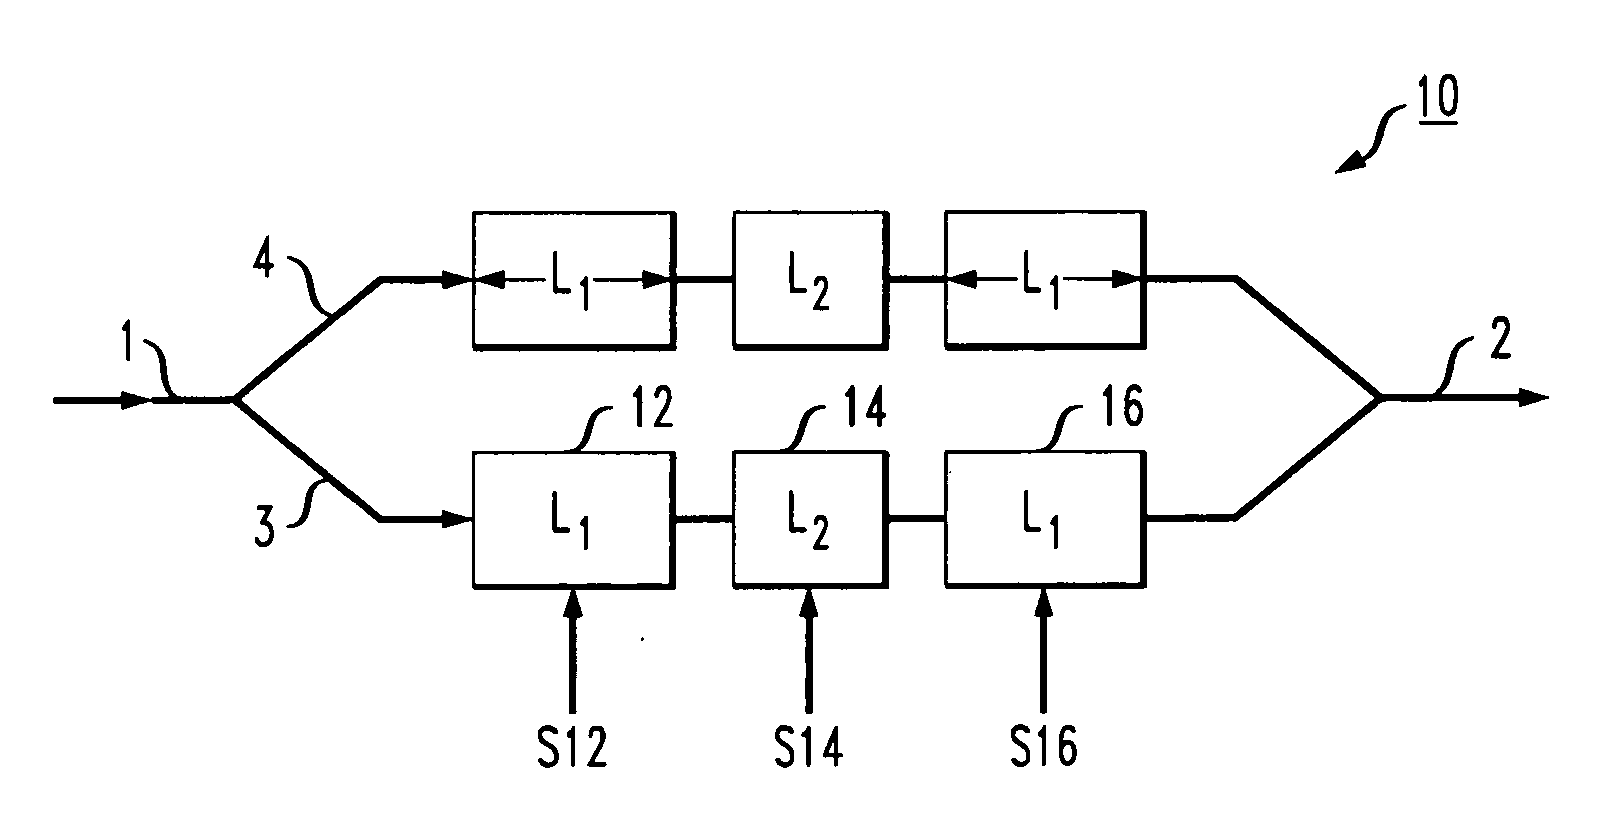 Optical modulator utilizing multi-level signaling